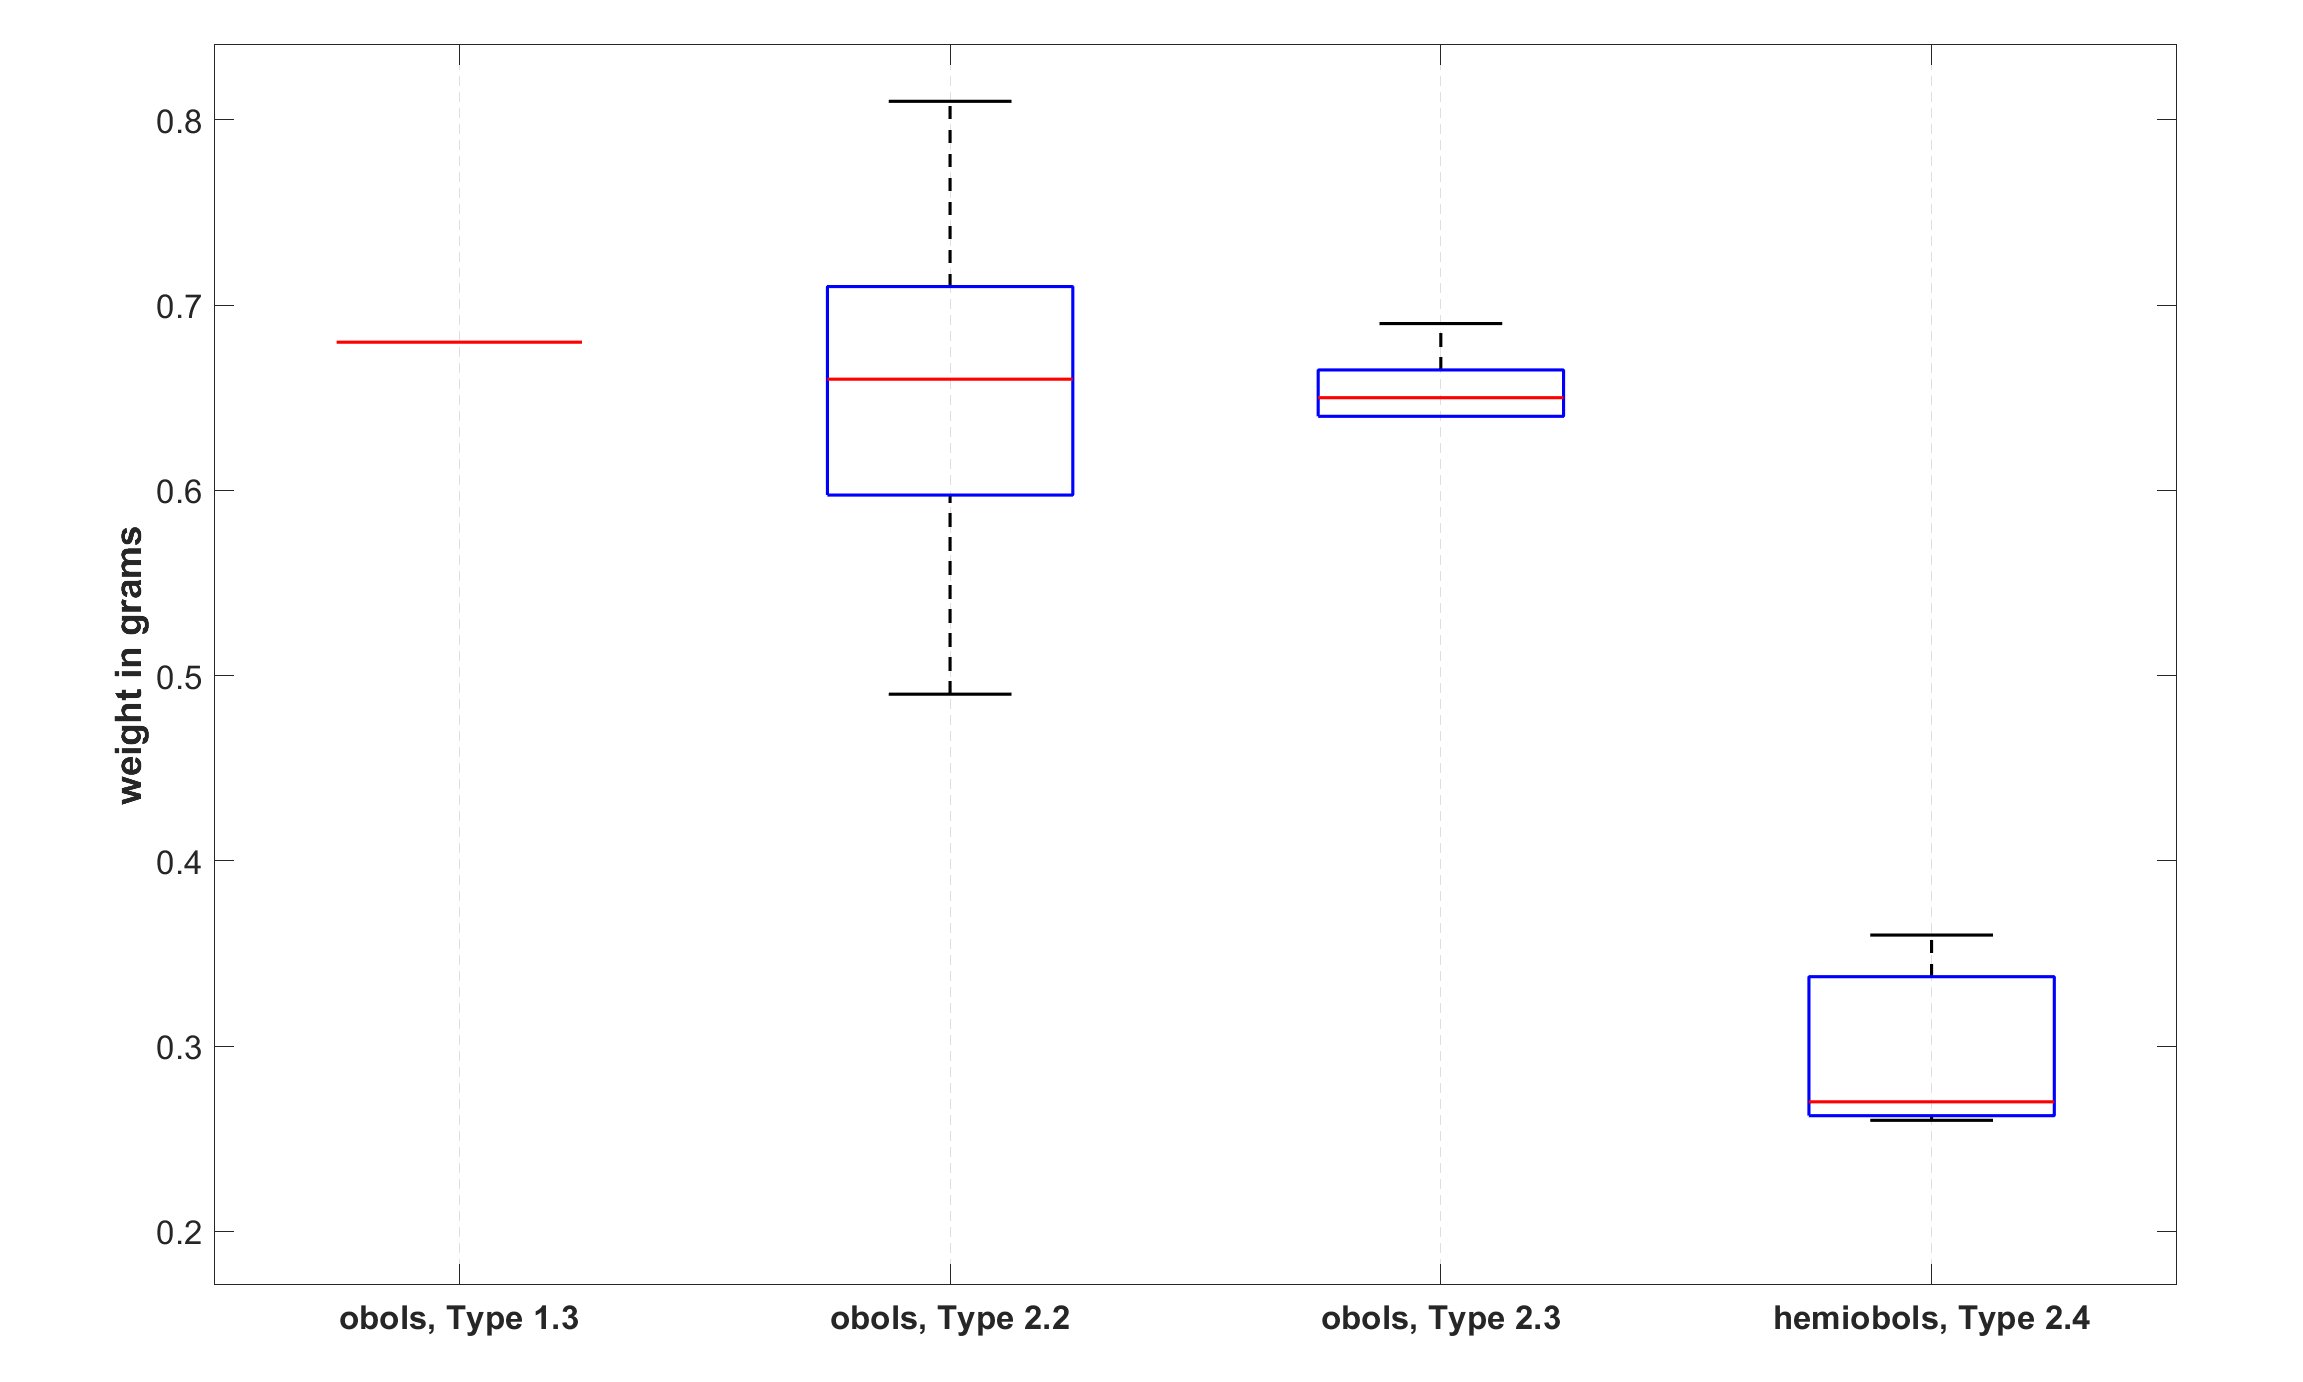 Figure 1: Box plots